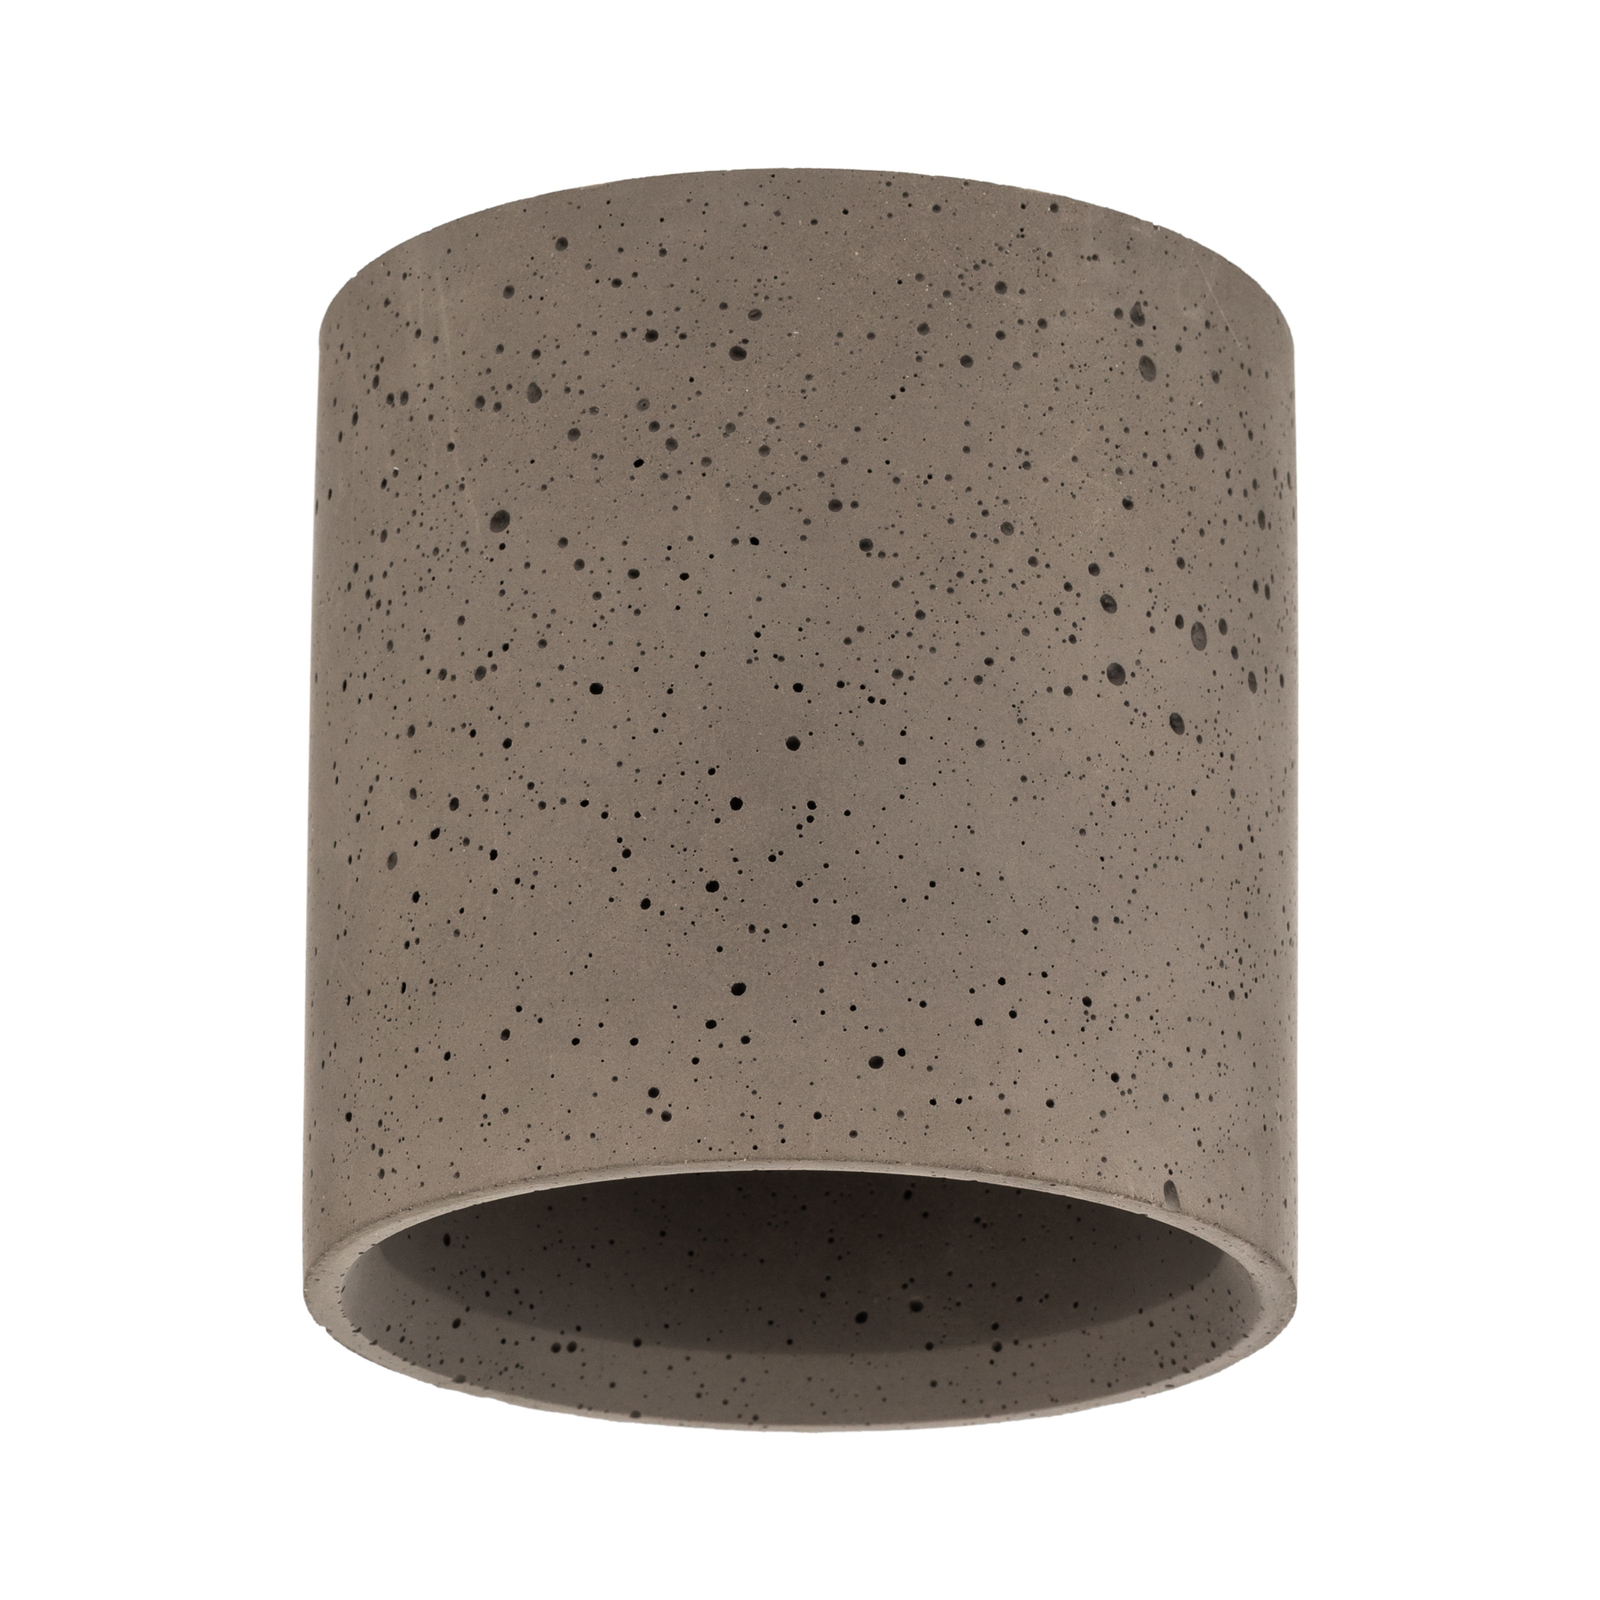 Downlight Shy M av betong Ø 14,5 cm